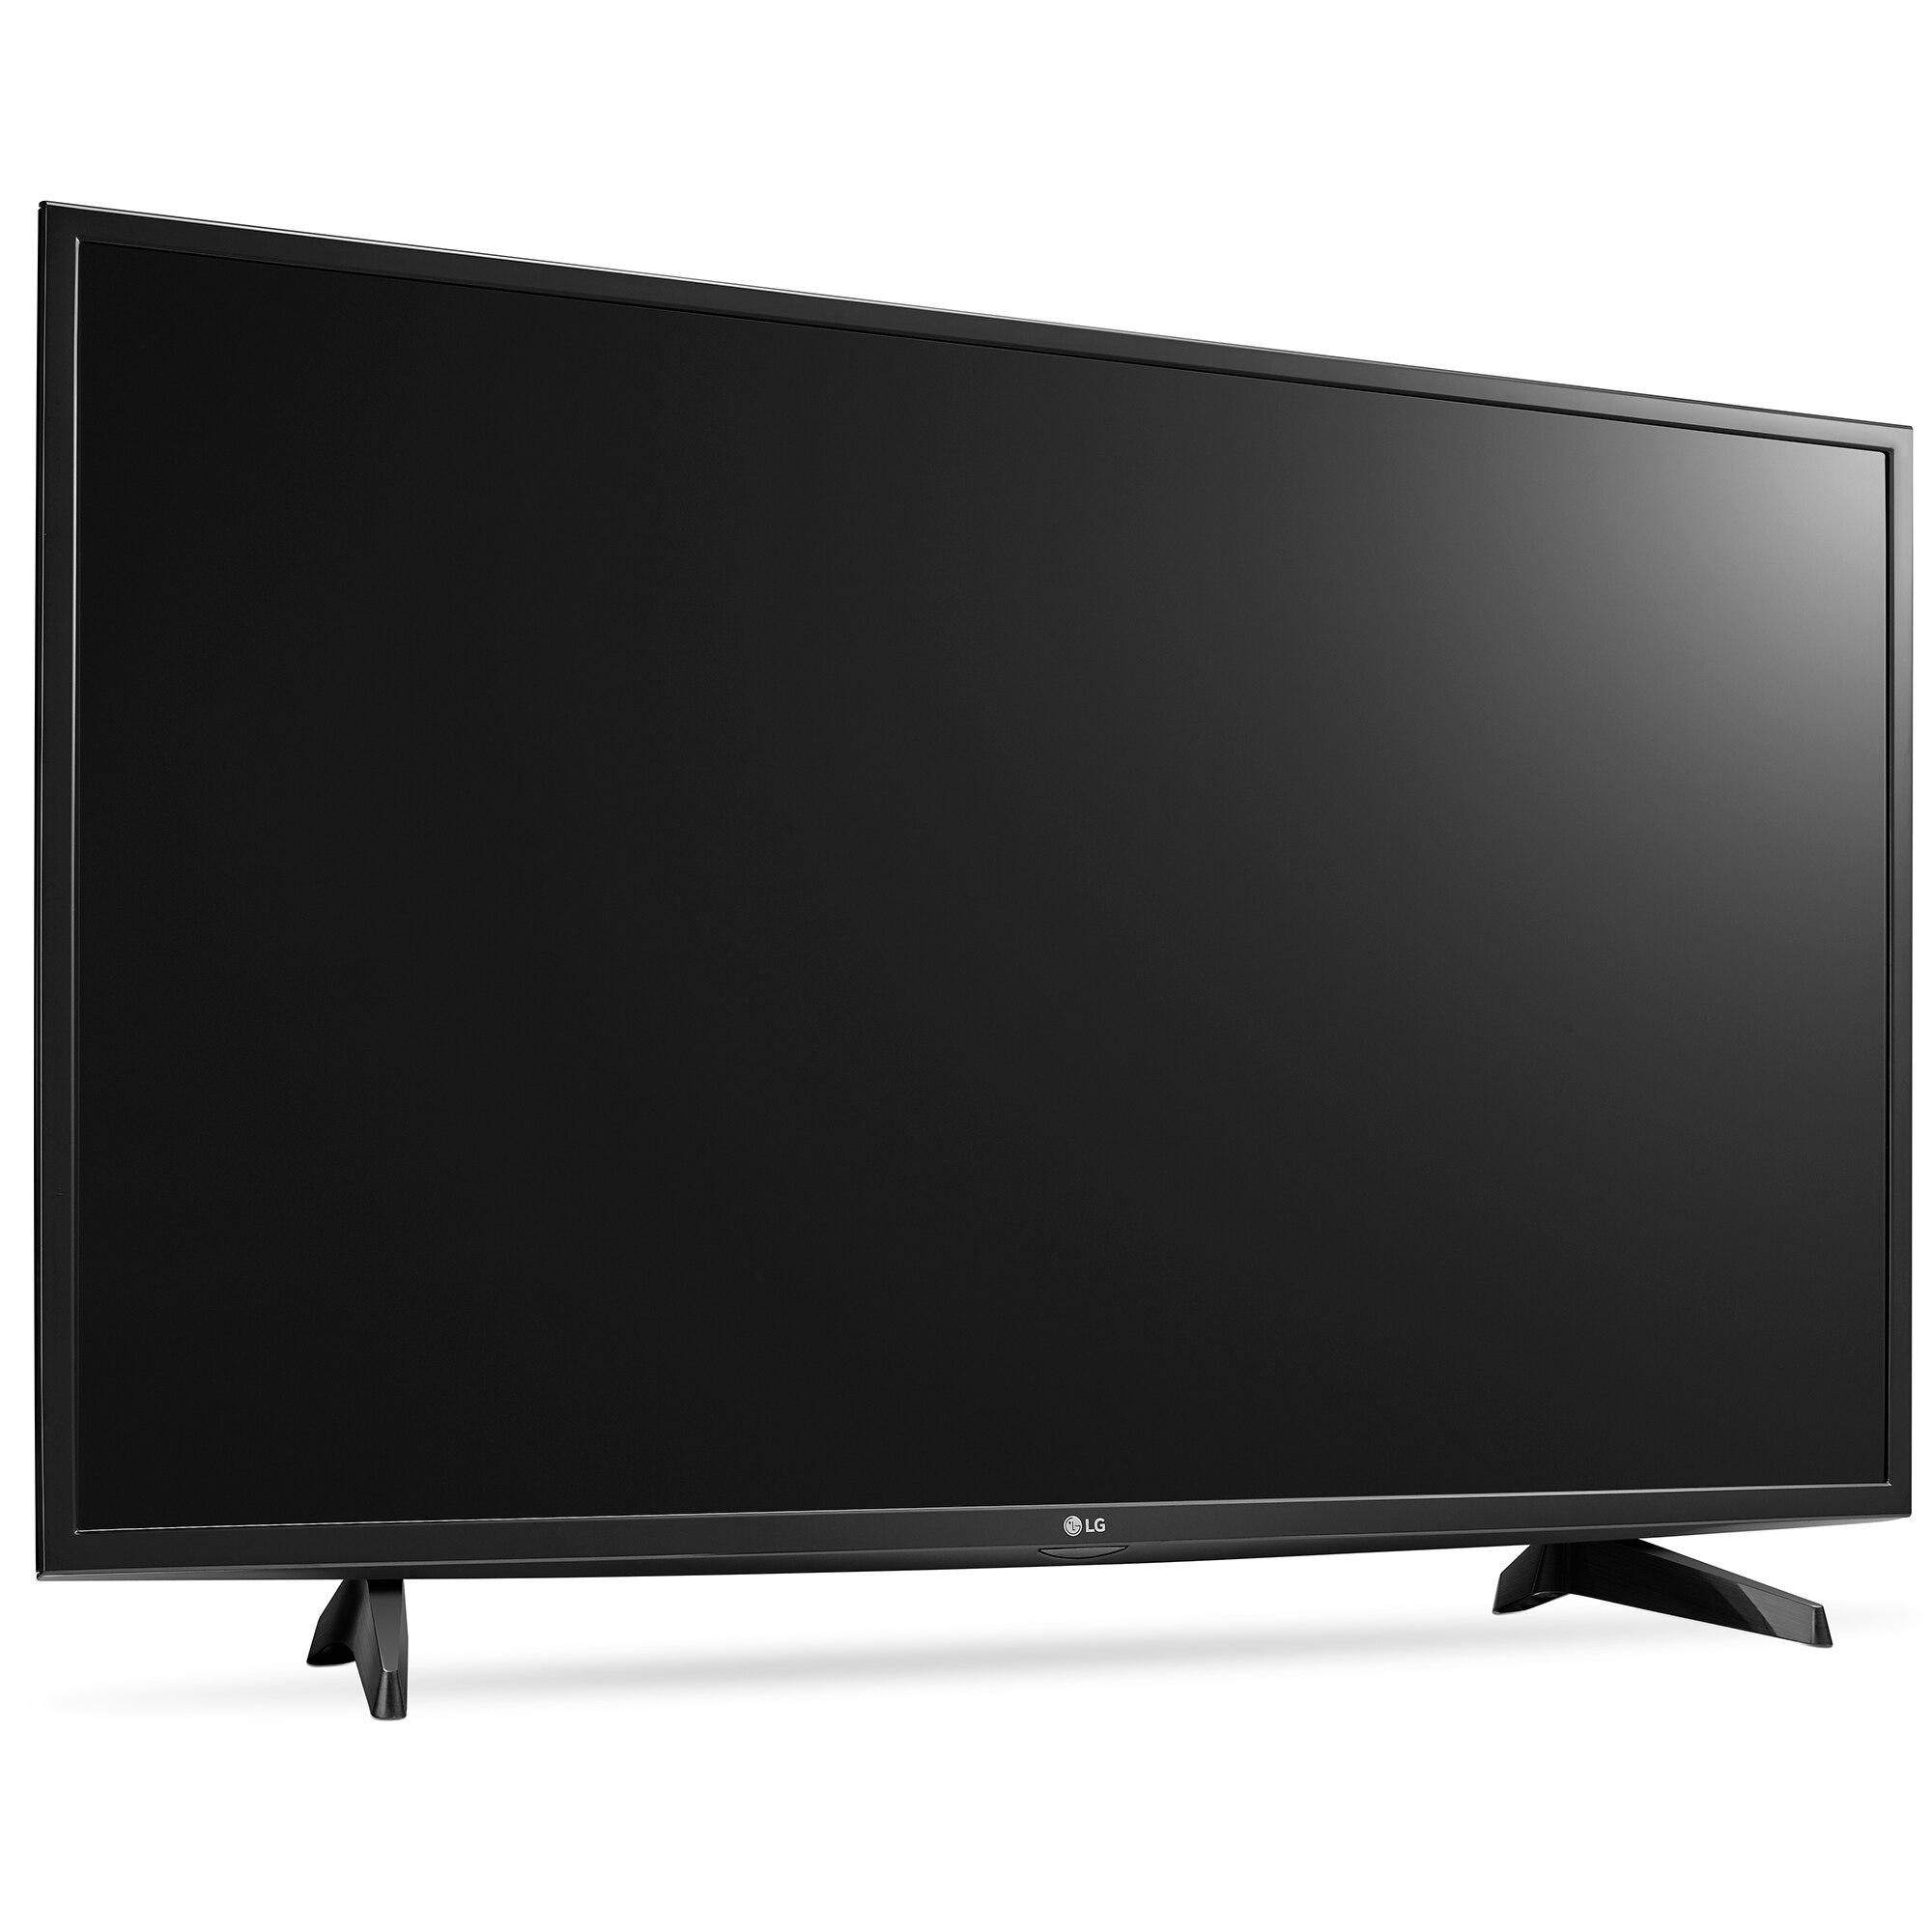 Телевизоры лджи отзывы. Телевизор LG 22ln420v-PZ. LG 24lp451v-PZ. Телевизор LG Smart TV 43 LH 570 V. Телевизор LG 43lj510v.